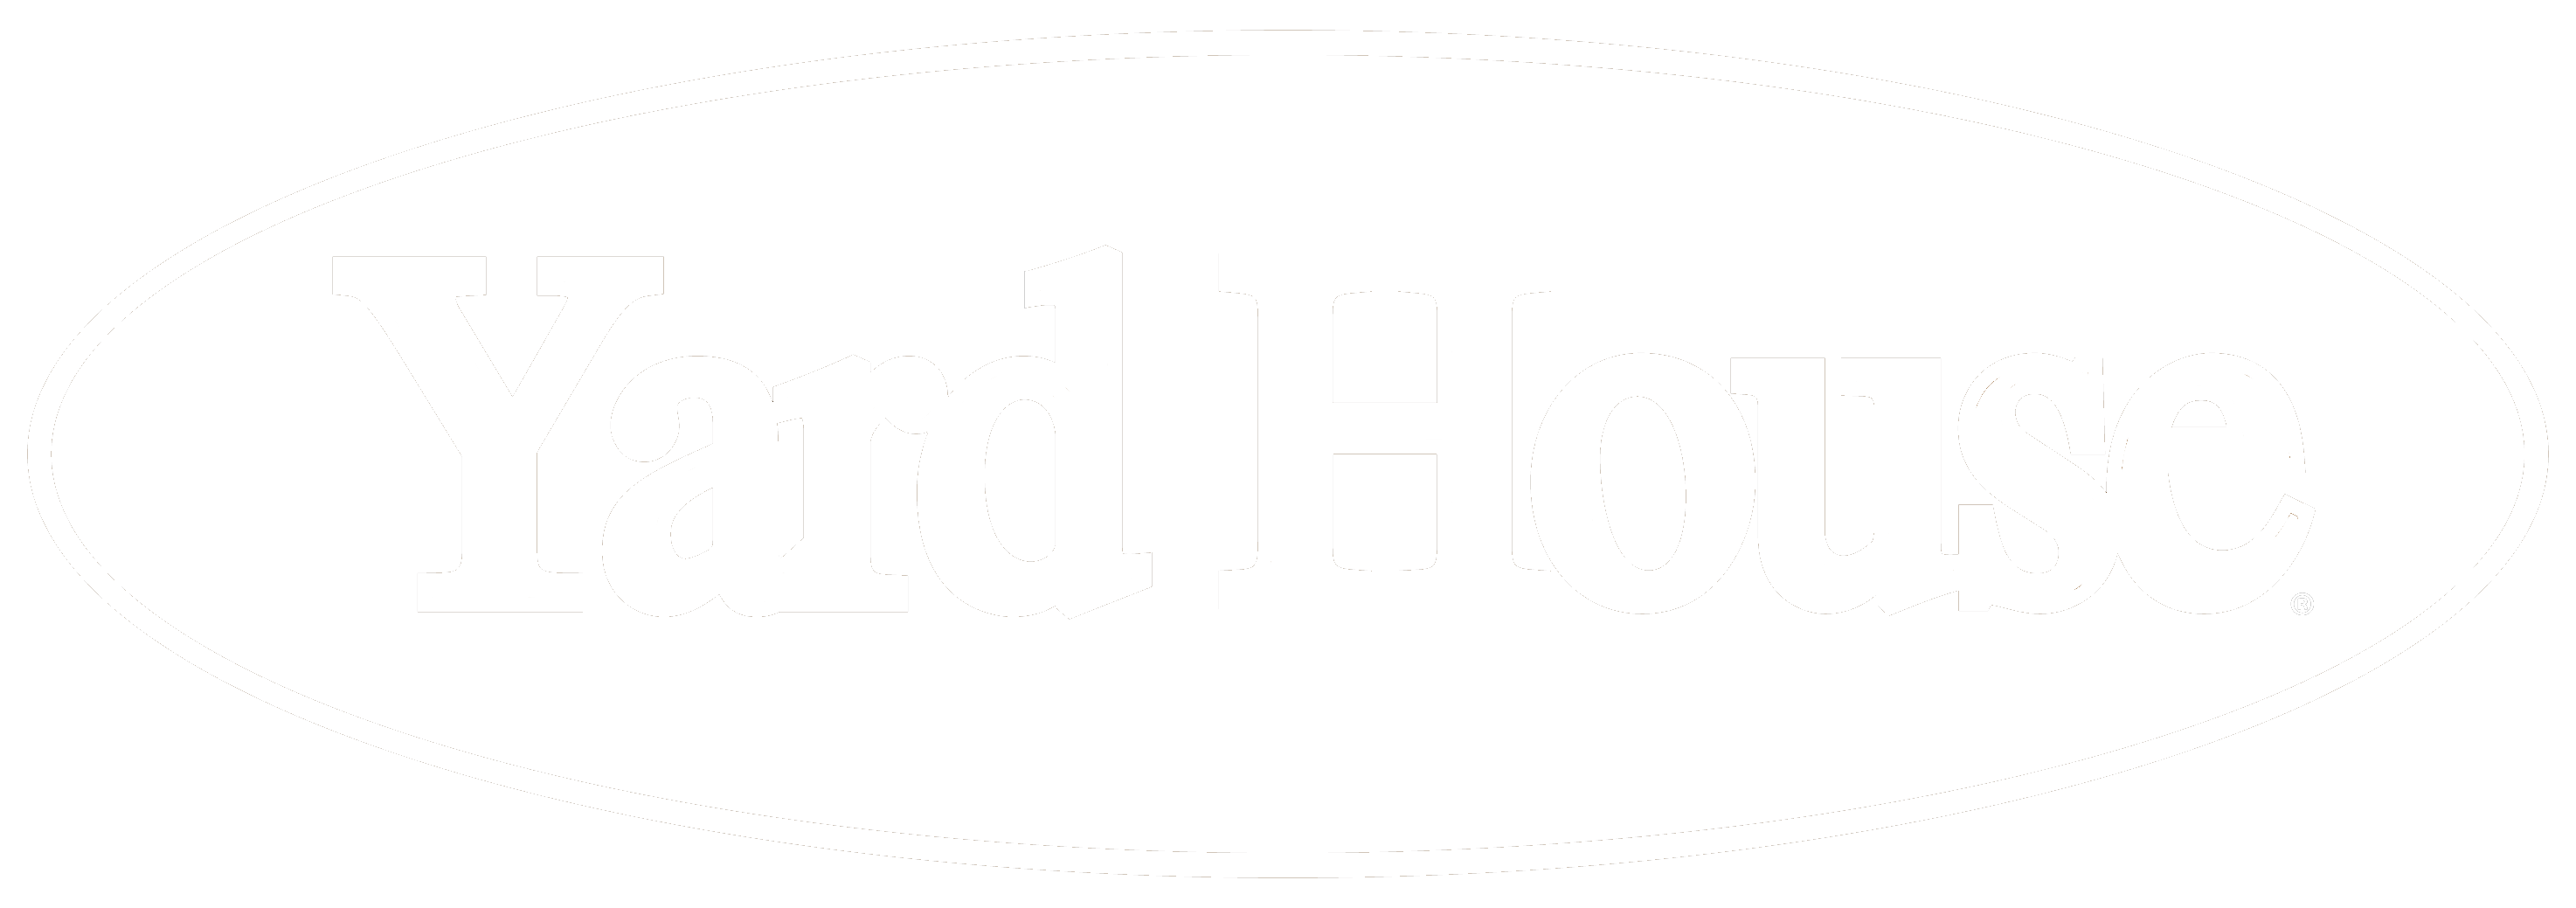 Yard House Logo - Power & Light District - Yard House